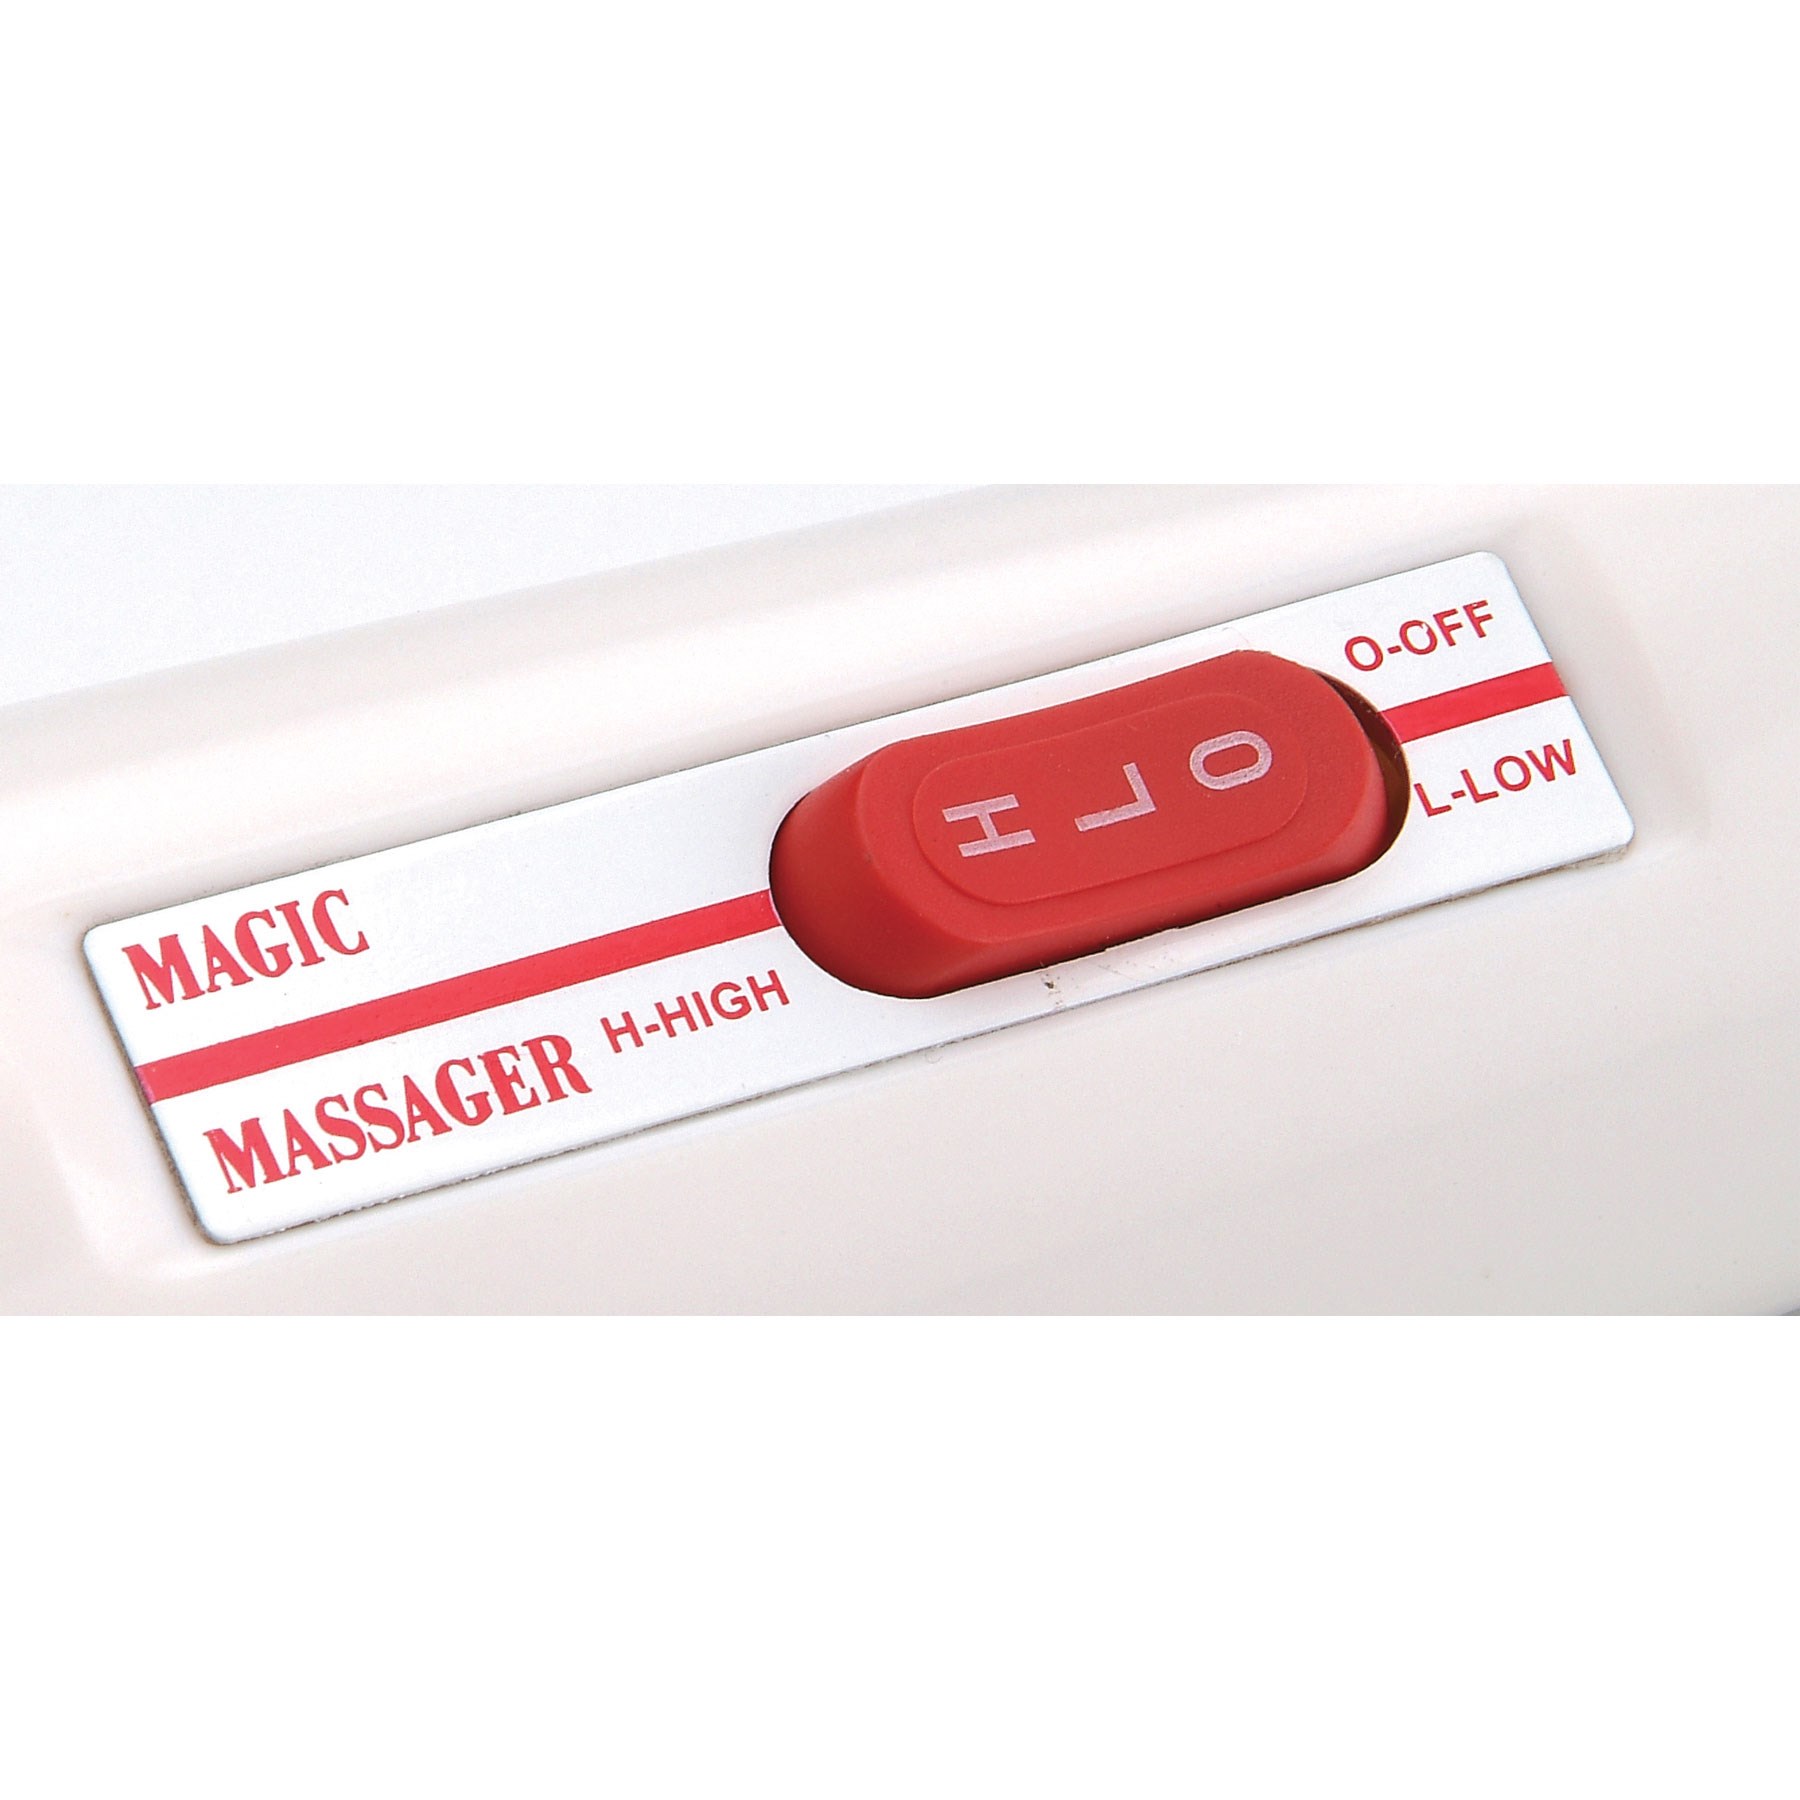 Magic Massager Original W/Rabbit Attachment wand controls